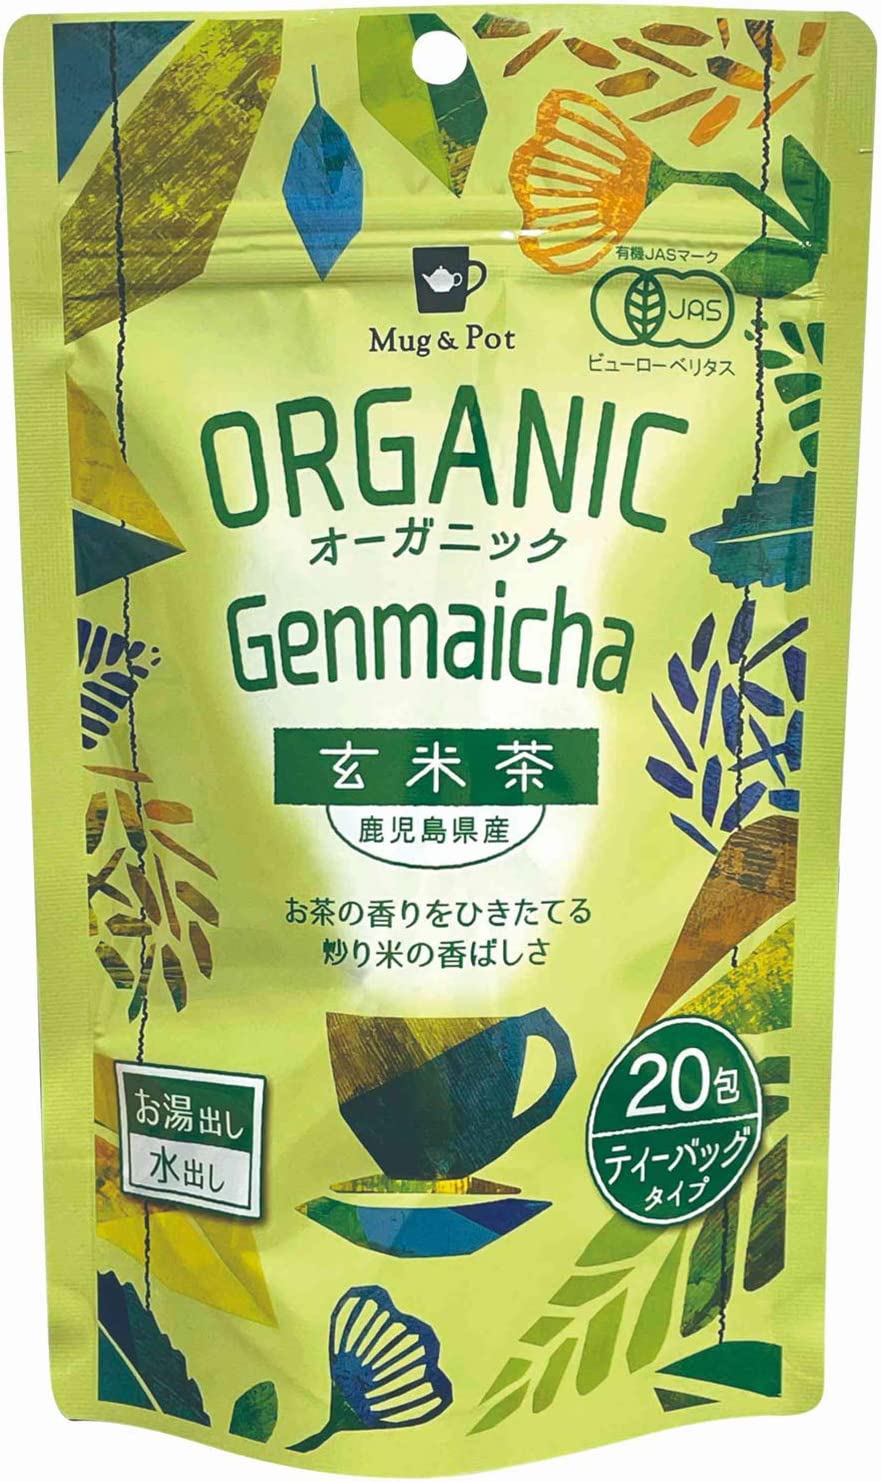 Tokyo Tea Trading Organic Brown Rice Tea (Genmaicha) 20p x 4 Packs by Mug&amp;Pot - NihonMura